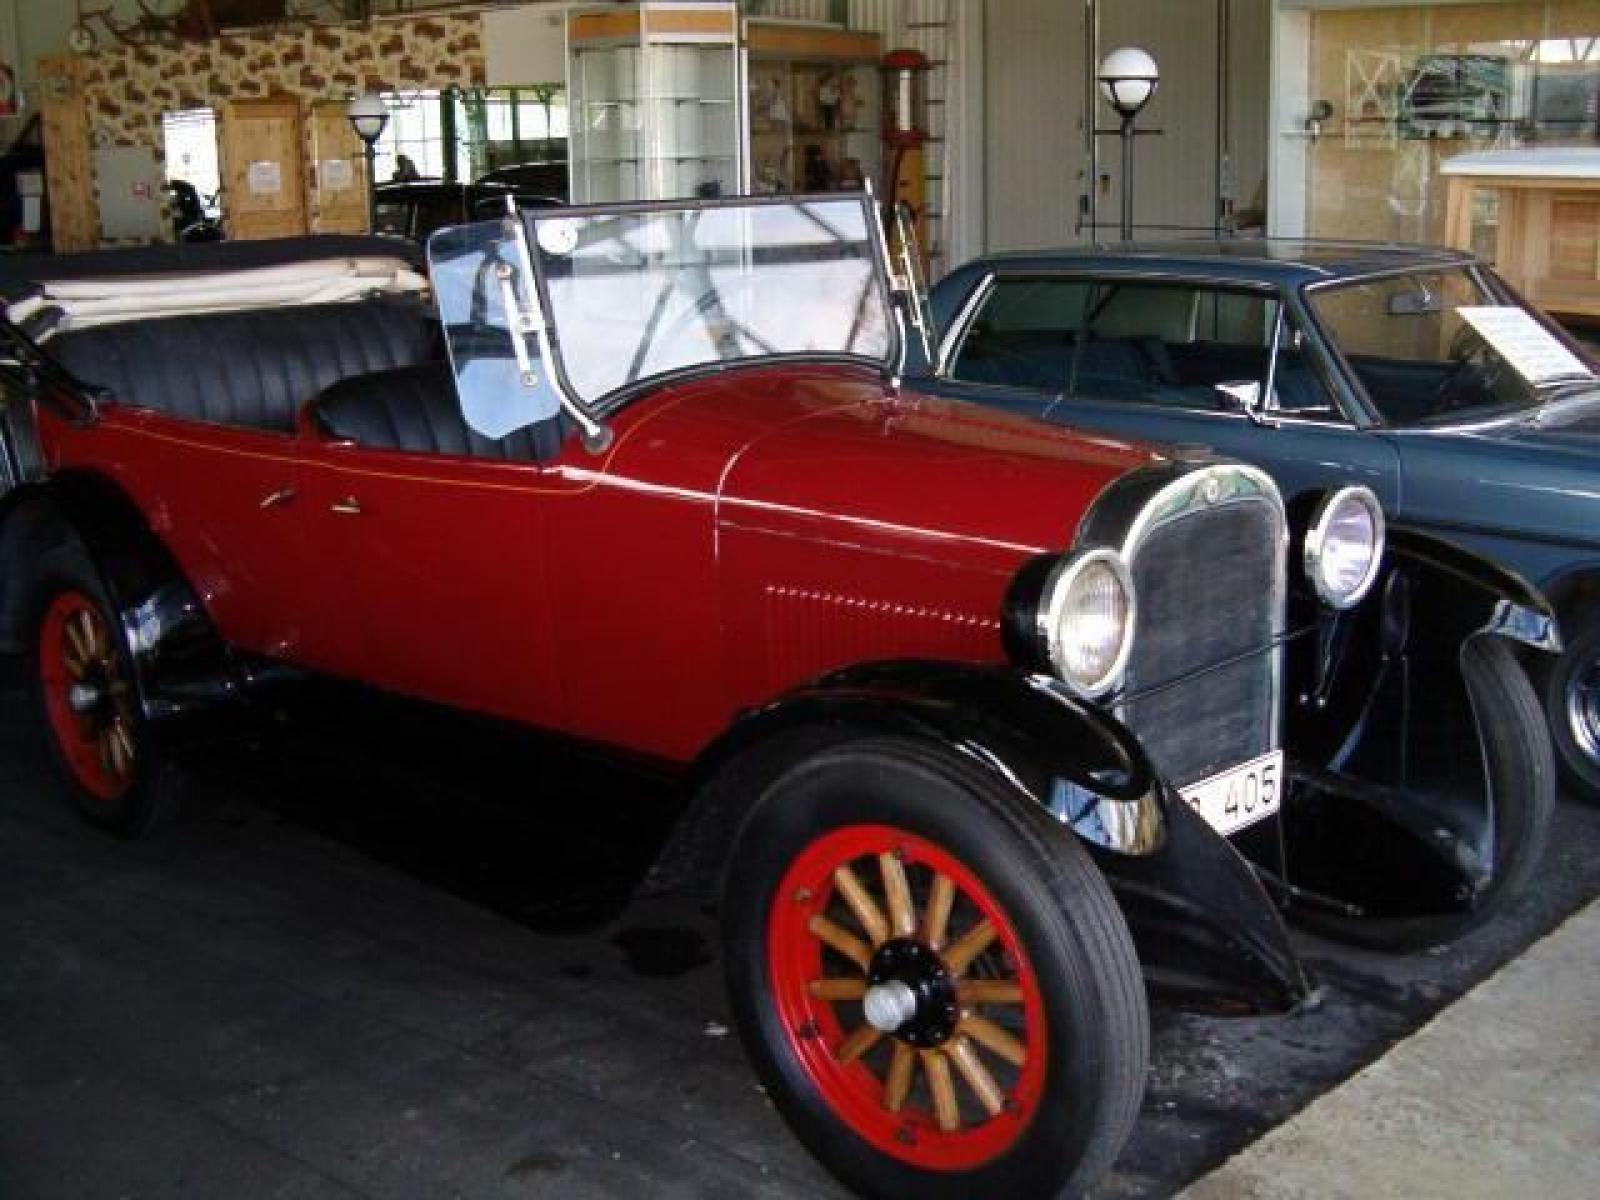 Ådalens classic car museum